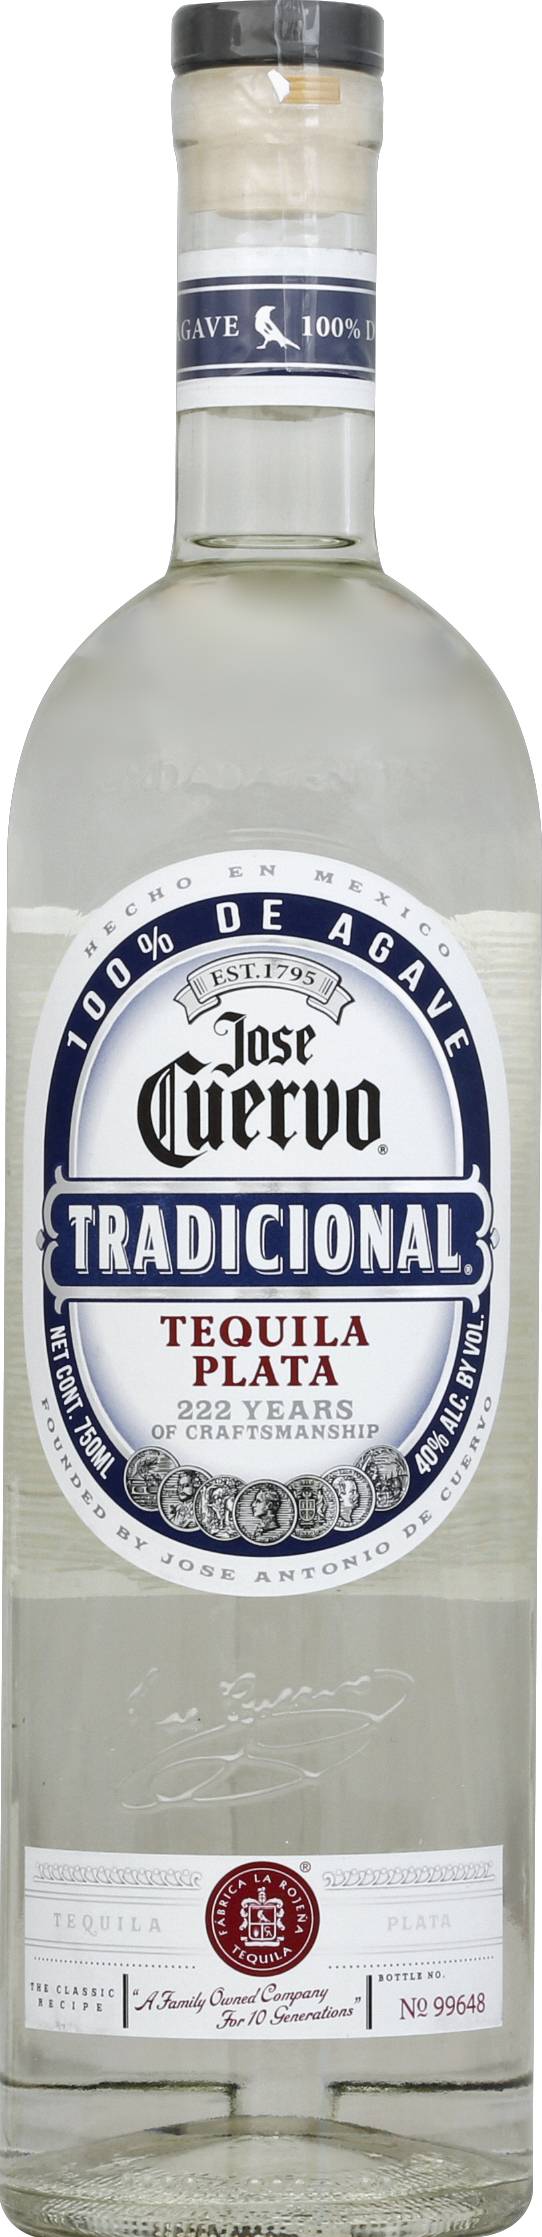 Jose Cuervo Tradicional Tequila Plata (750 ml)